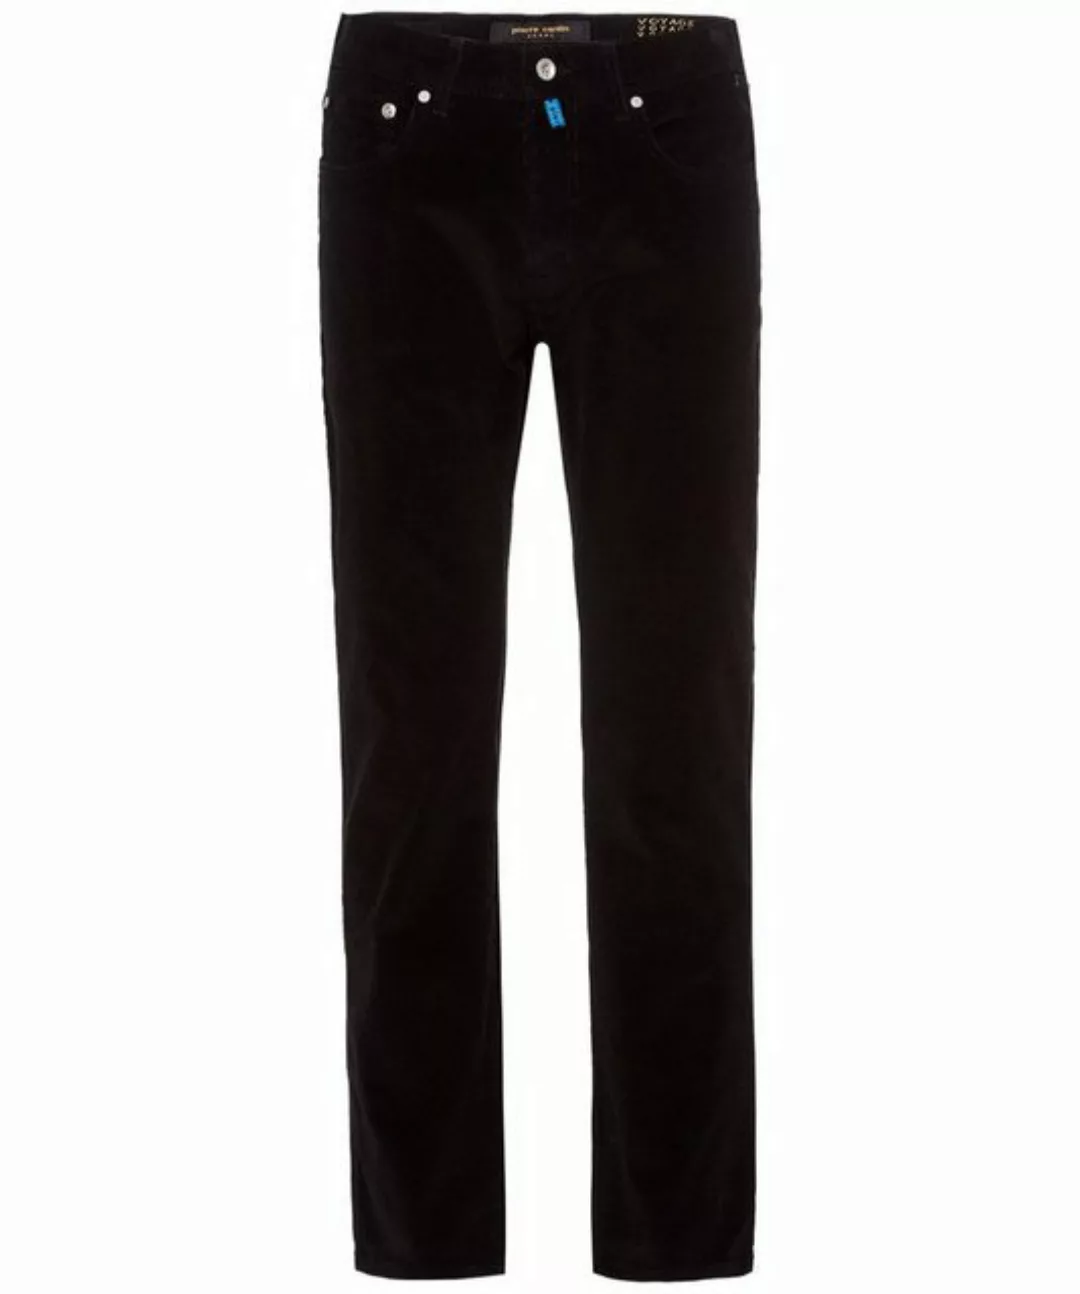 Pierre Cardin 5-Pocket-Jeans PIERRE CARDIN LYON schwarz cord 30947 777.88 - günstig online kaufen